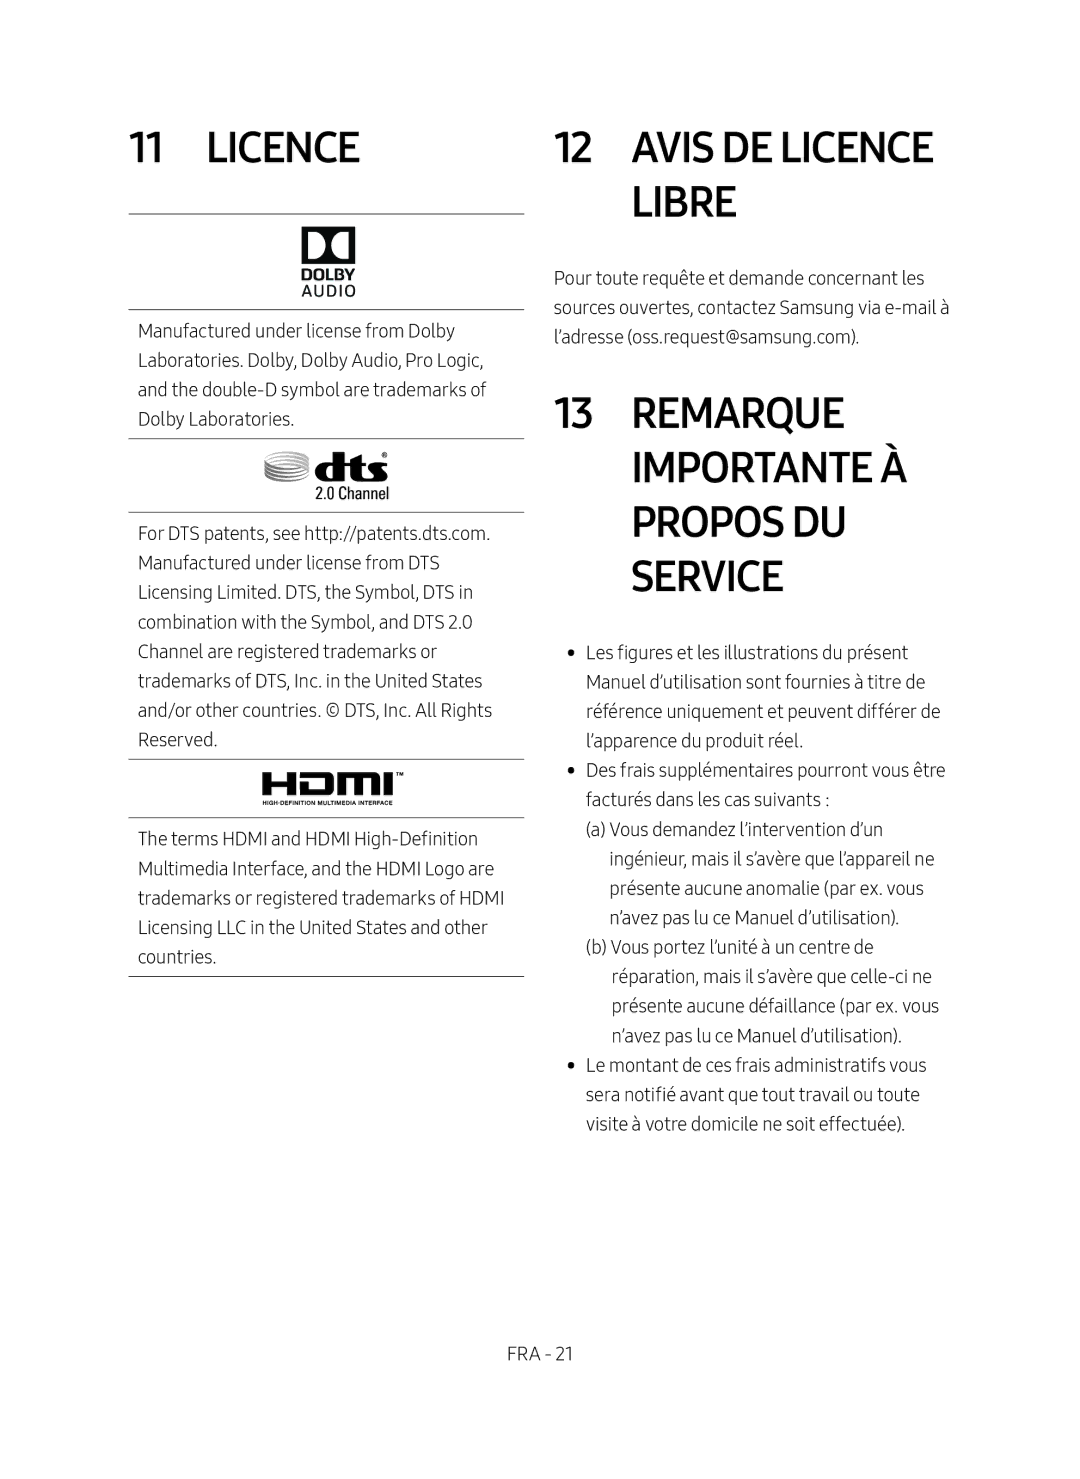 Samsung HW-M4500/EN manual Avis de Licence Libre, Remarque Importante à Propos du Service 